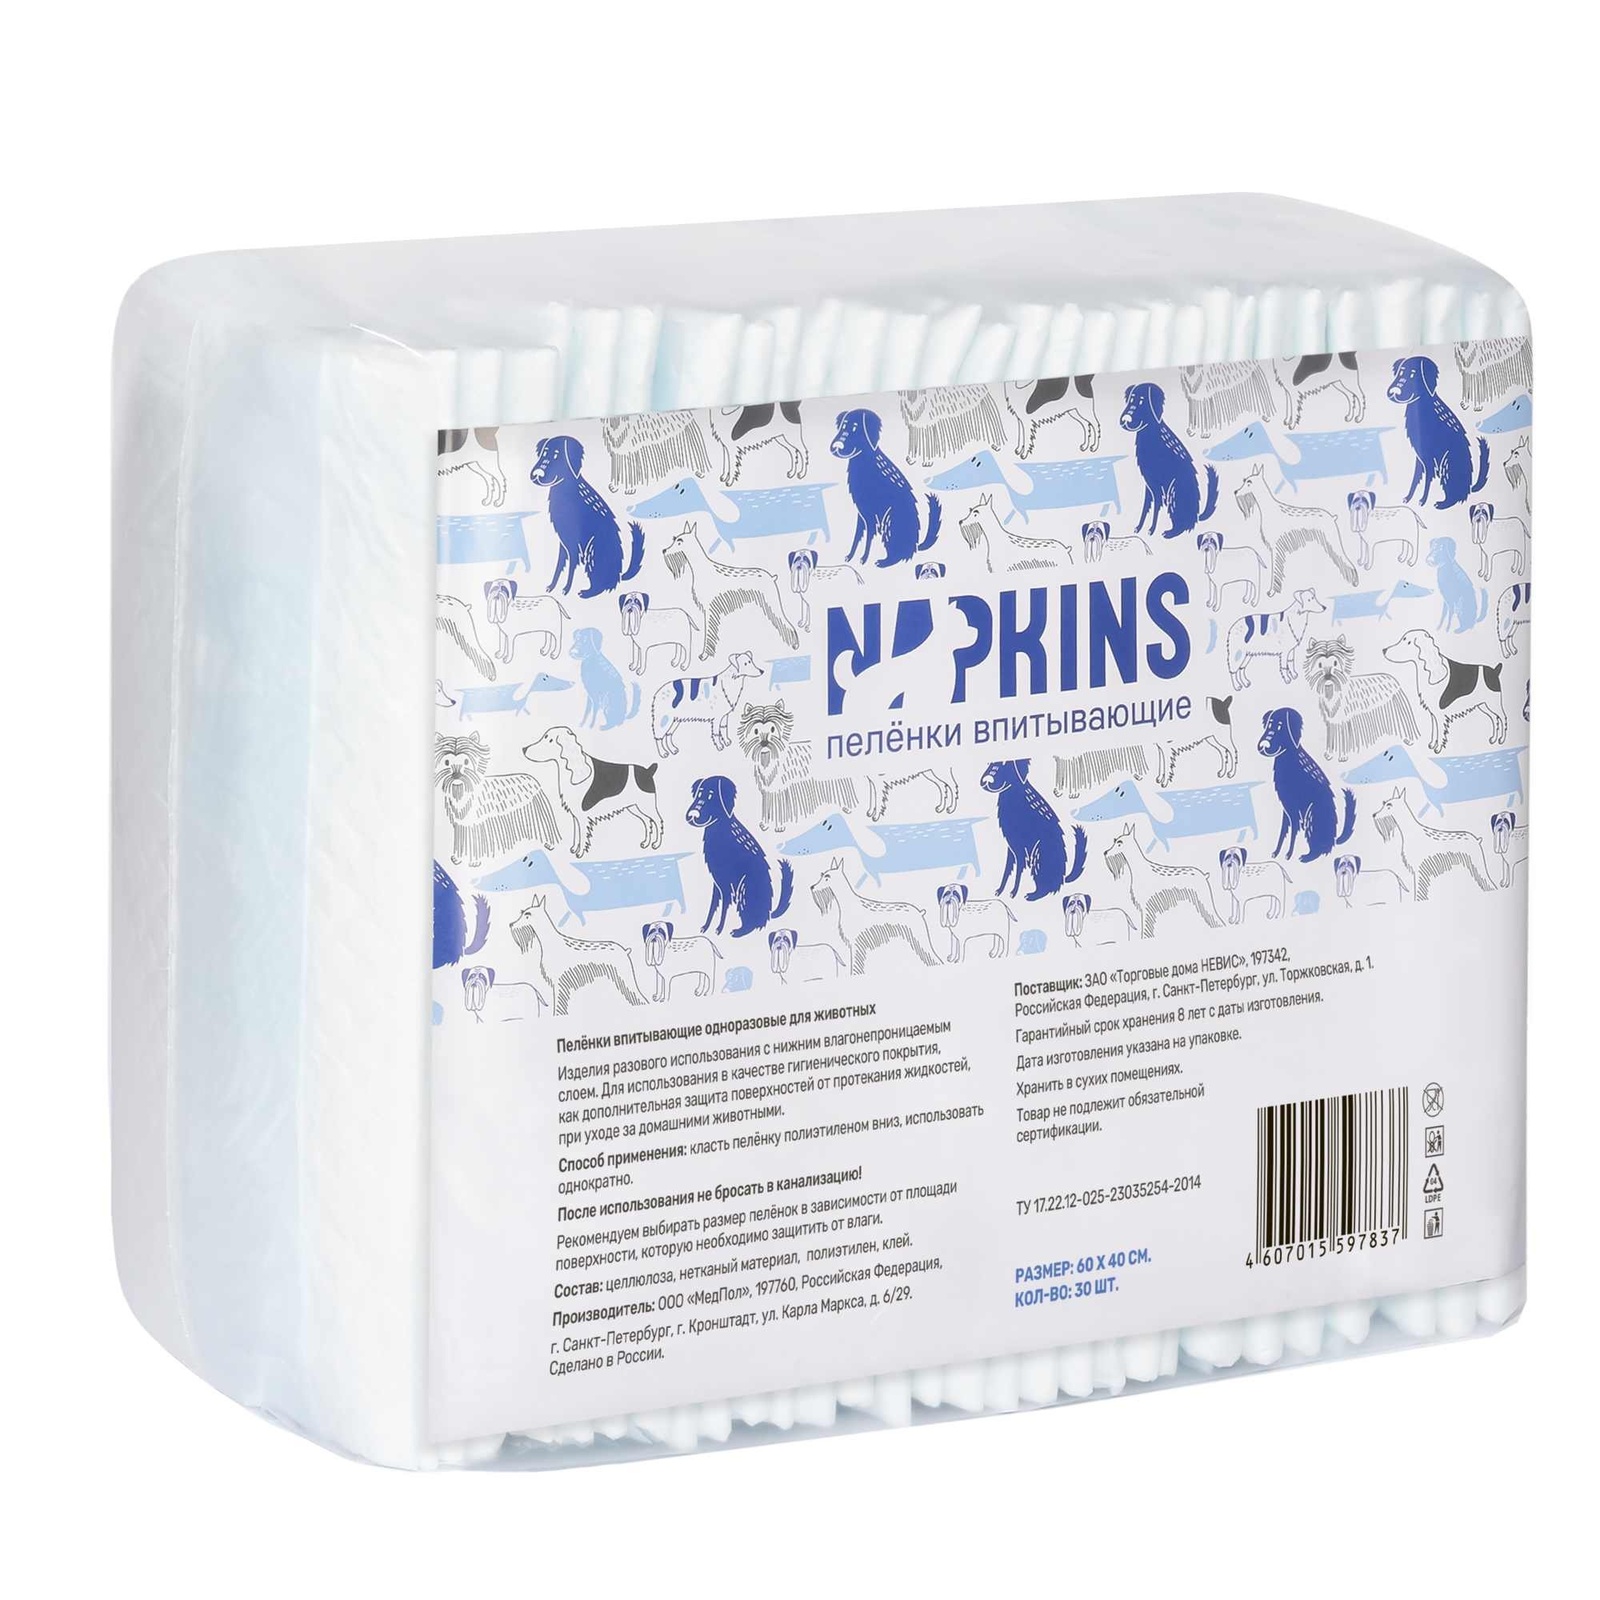 NAPKINS NAPKINS впитывающие пелёнки с целлюлозой для собак 60х40 (100 г) napkins napkins впитывающие пелёнки с целлюлозой для собак 60х60 100 г